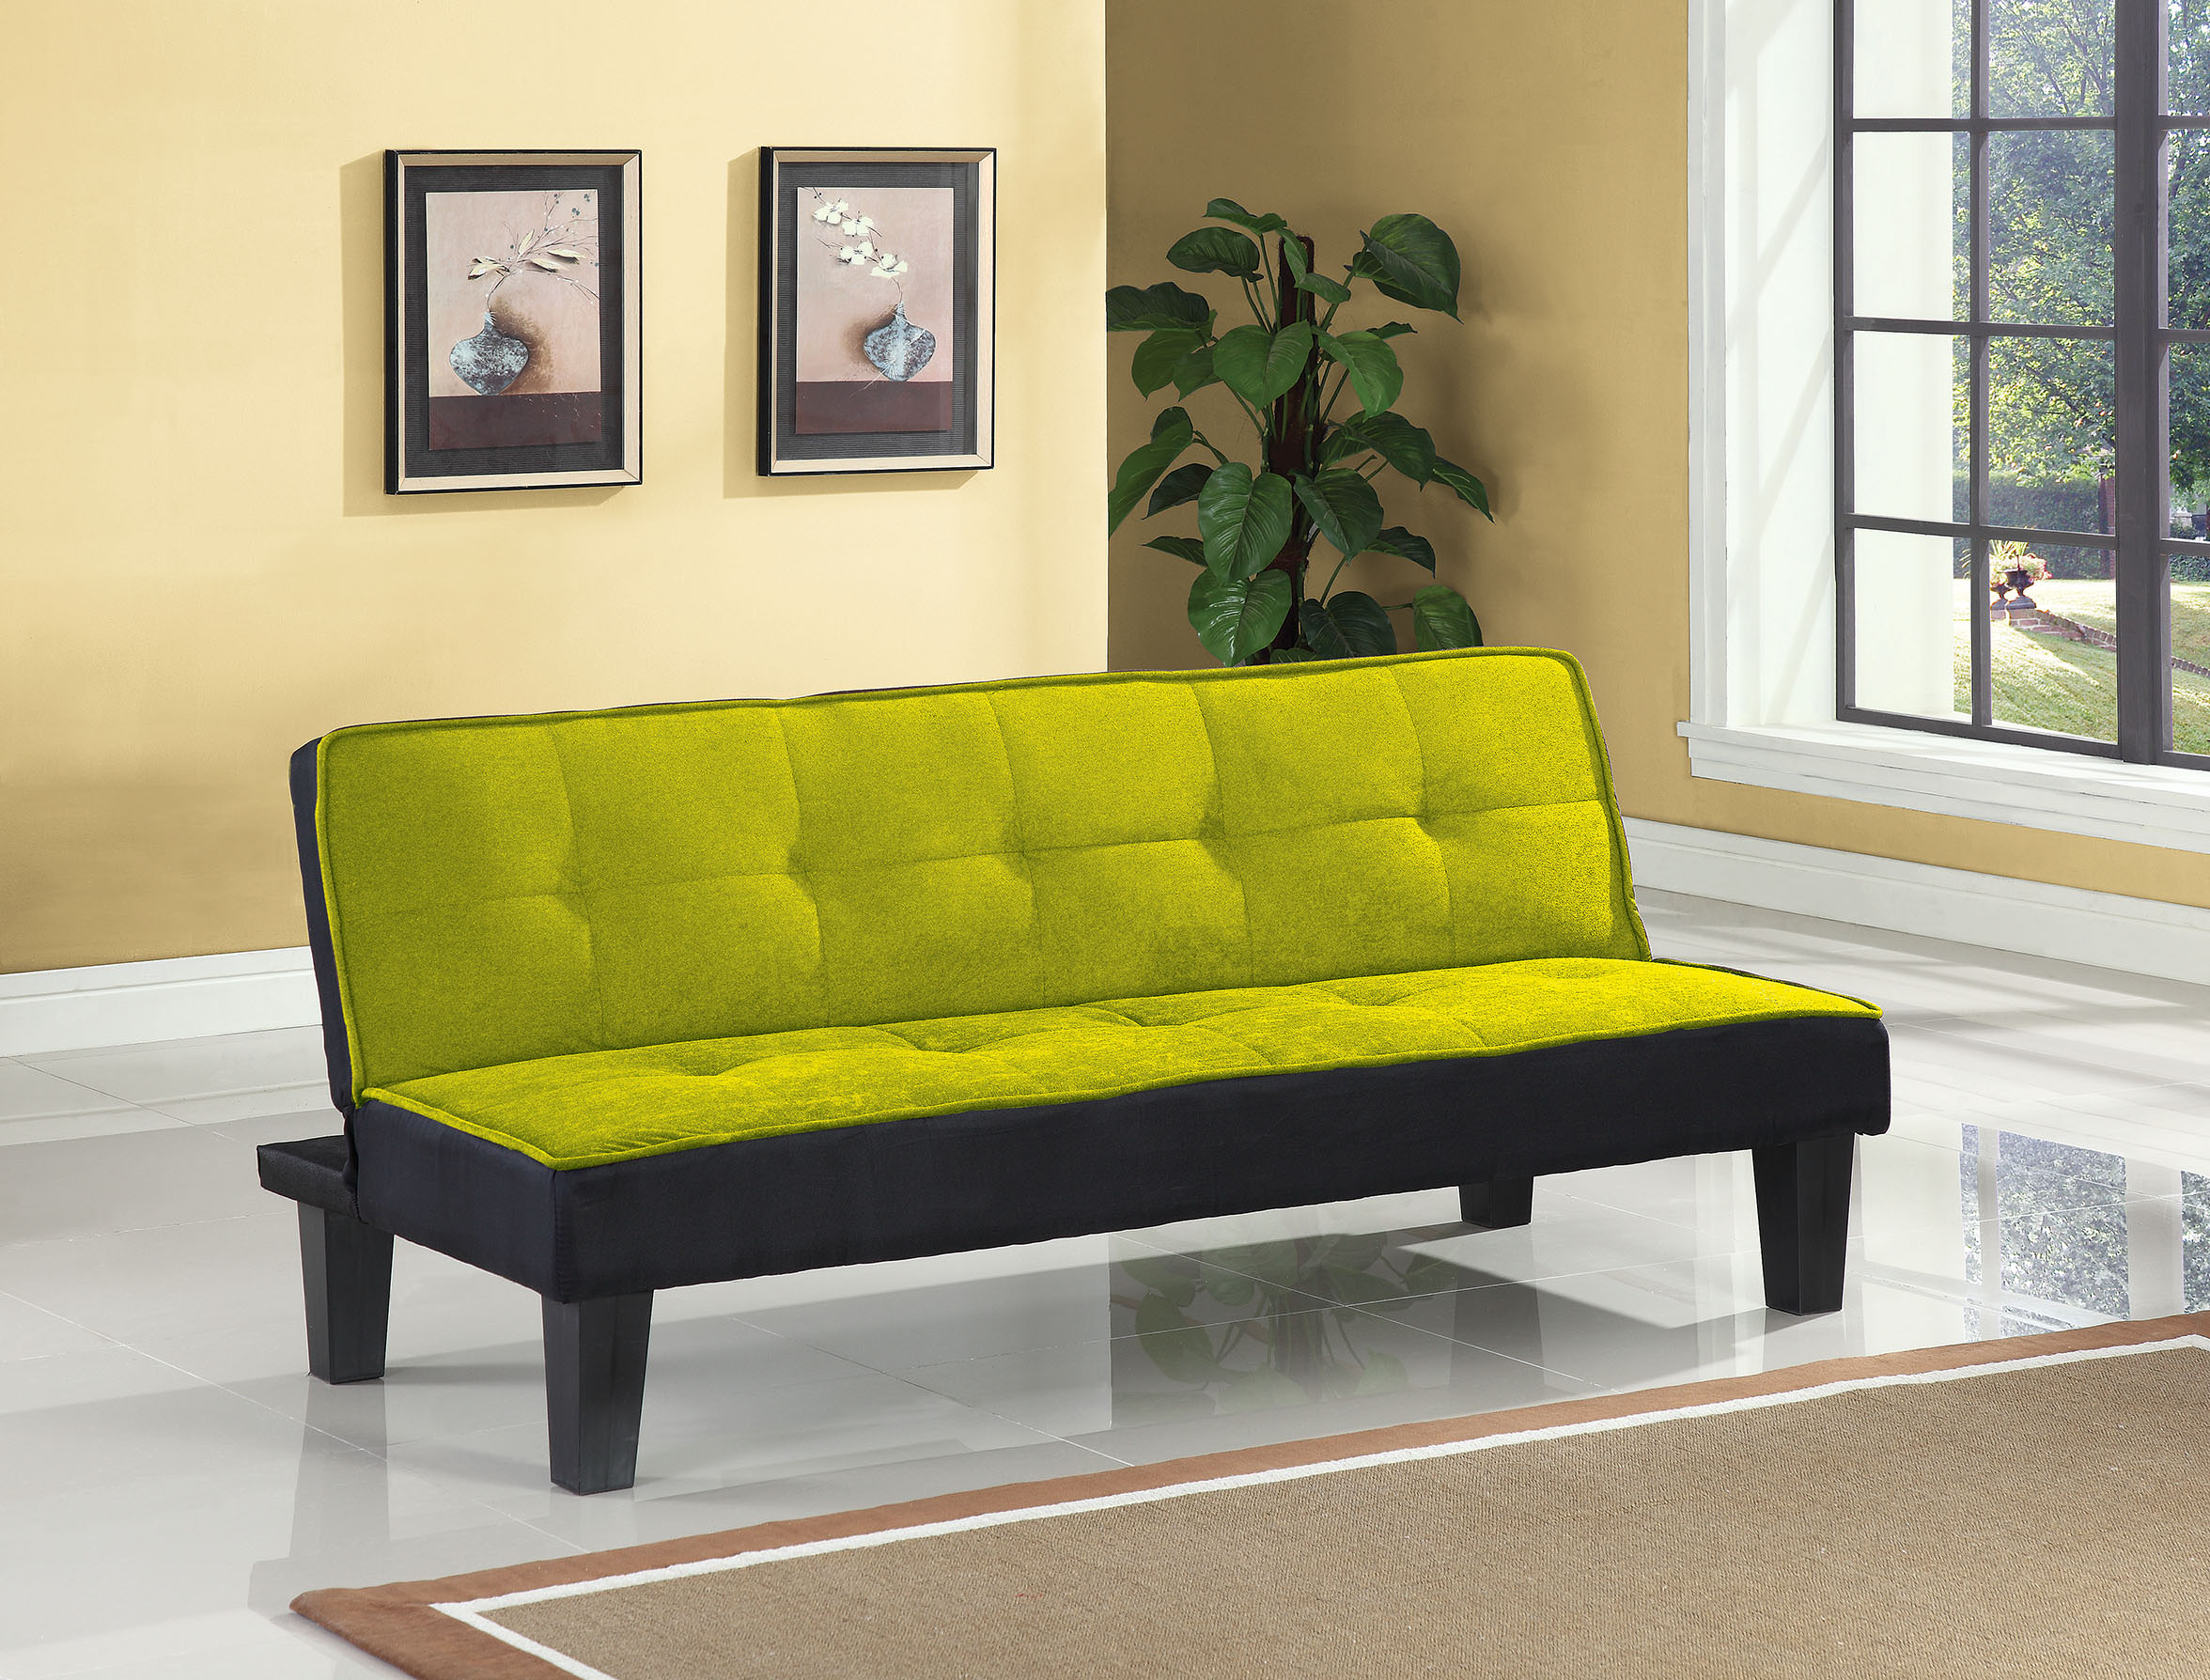 ACME Furniture Hamar Flannel Futon, Multiple Colors - image 2 of 2